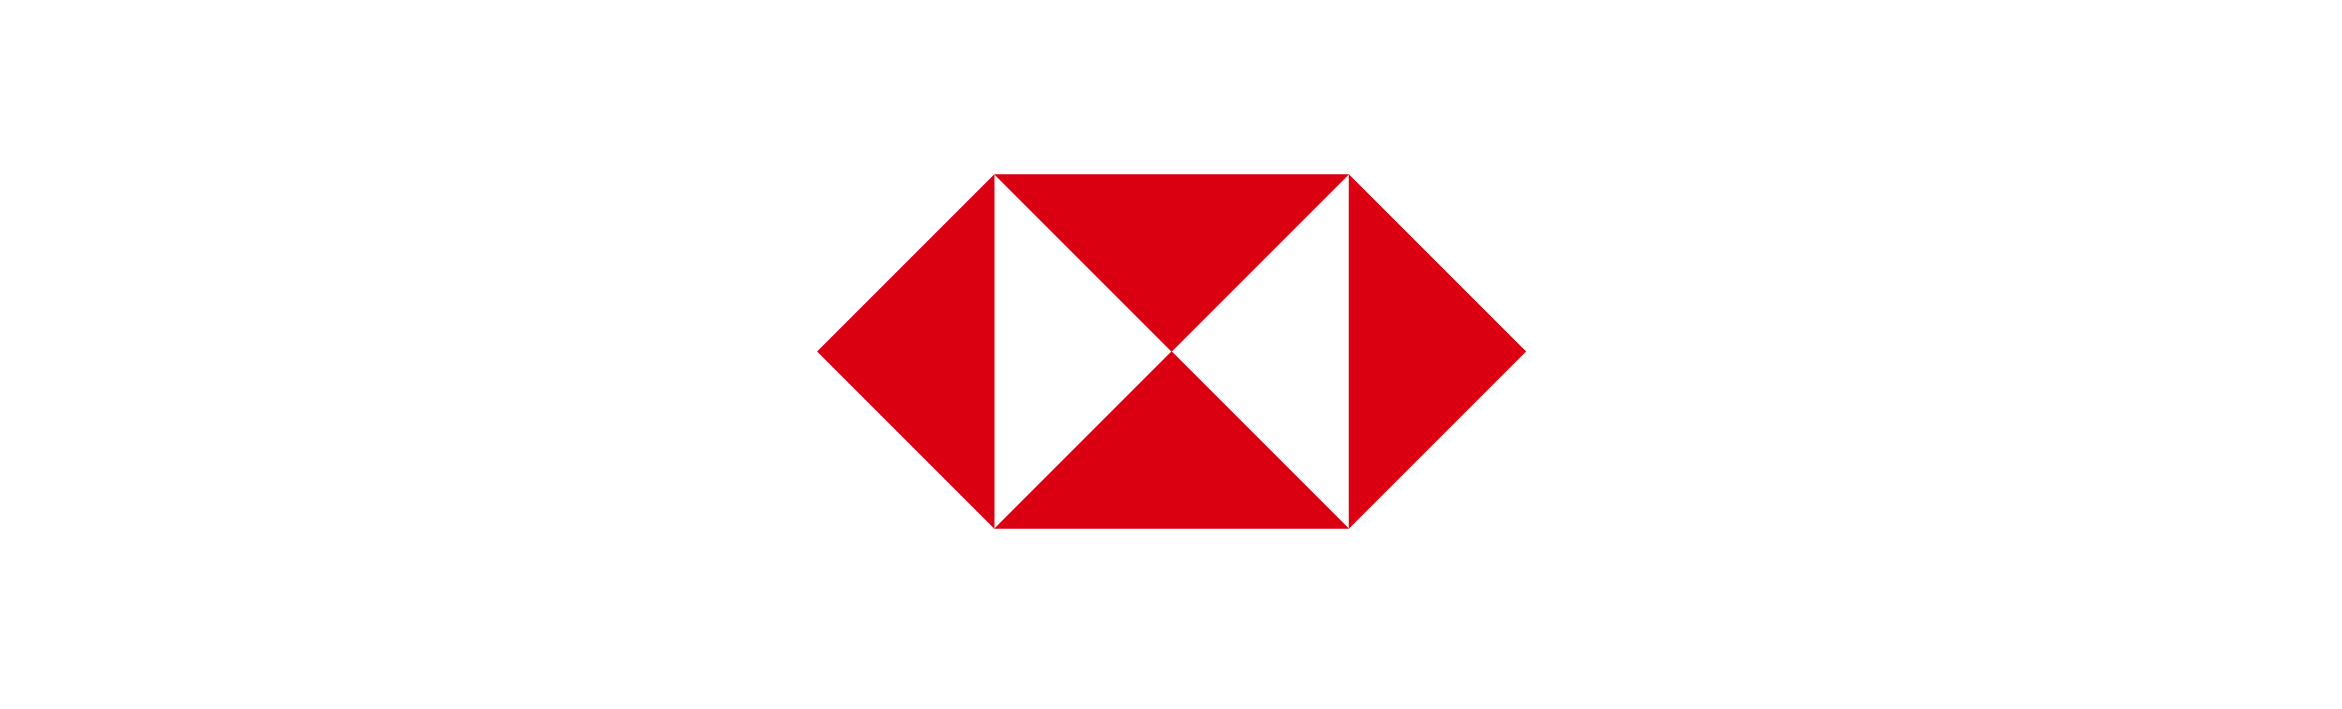 HSBC Private Banking logo